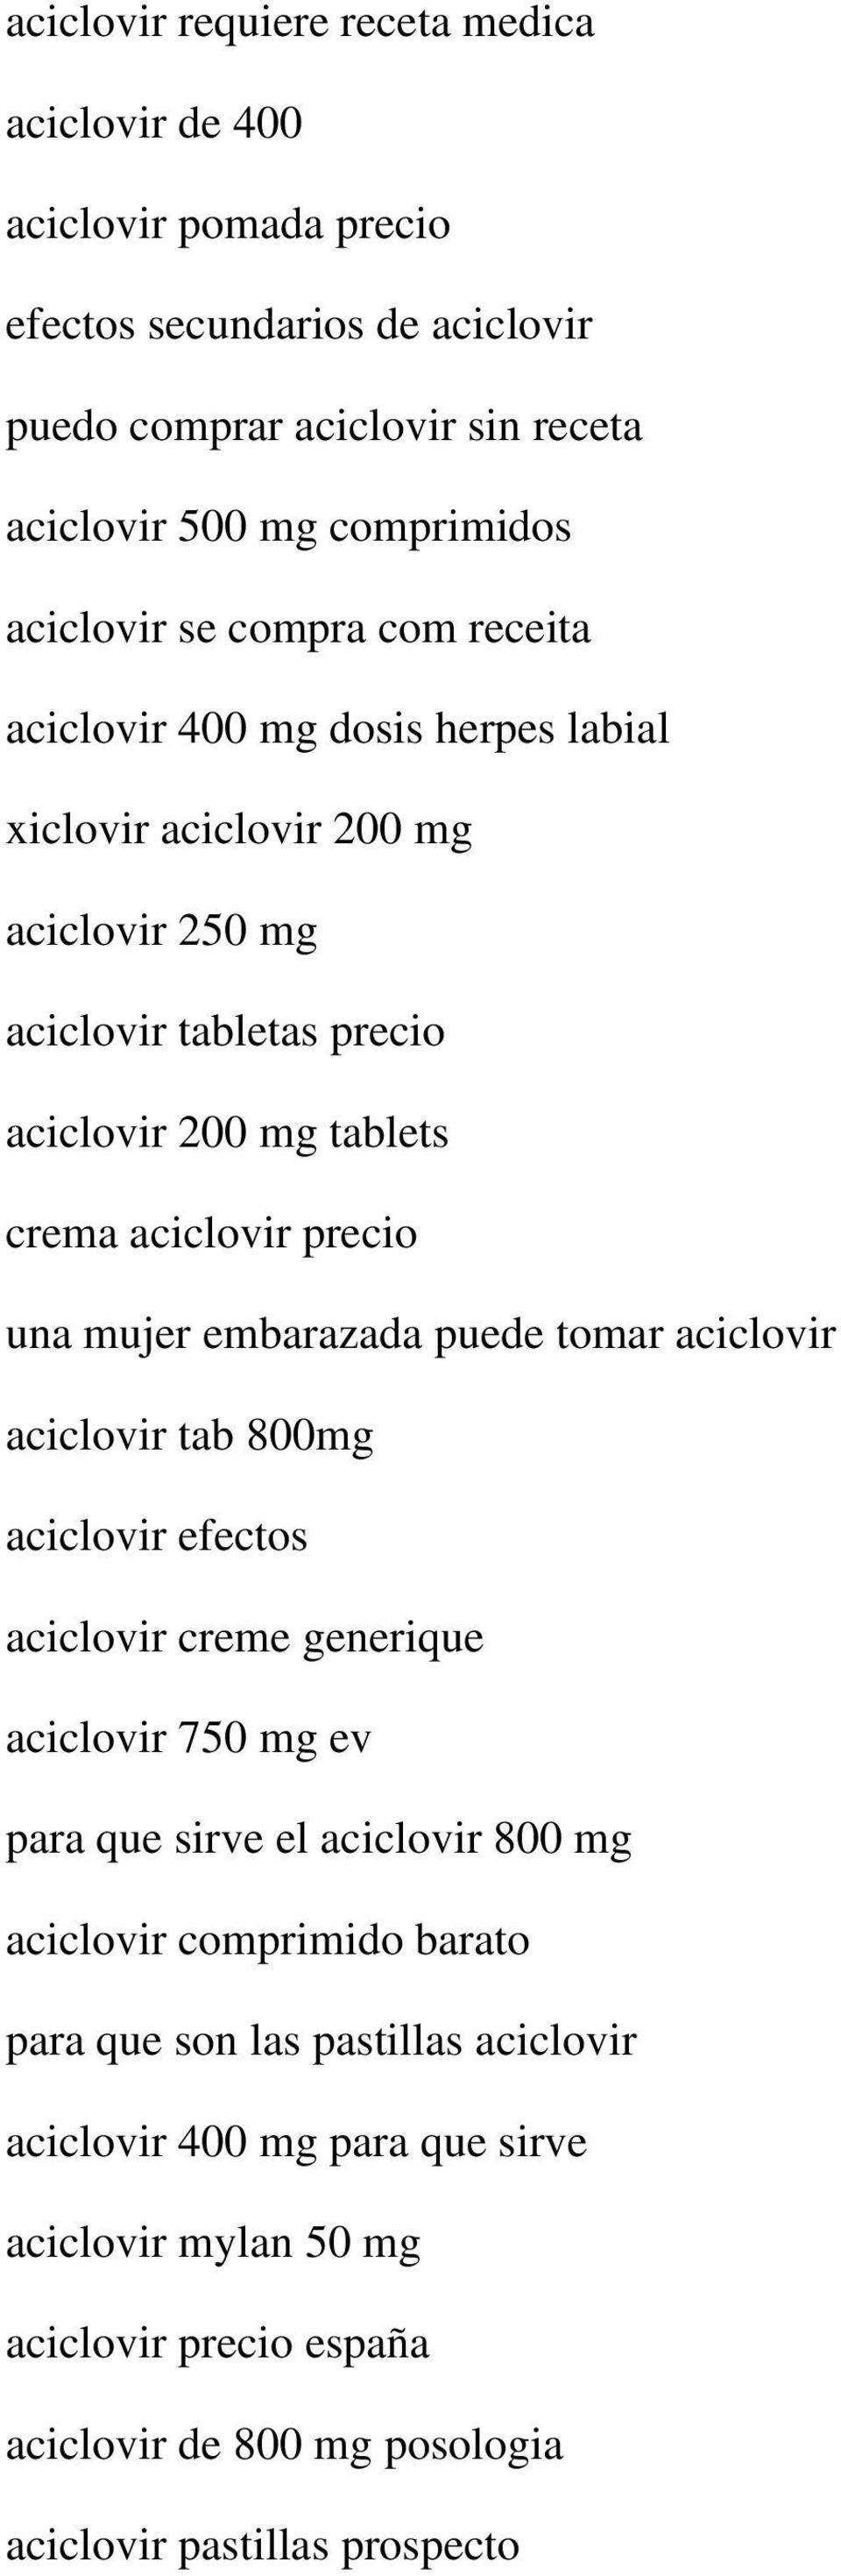 mujer embarazada puede tomar aciclovir aciclovir tab 800mg aciclovir efectos aciclovir creme generique aciclovir 750 mg ev para que sirve el aciclovir 800 mg aciclovir comprimido